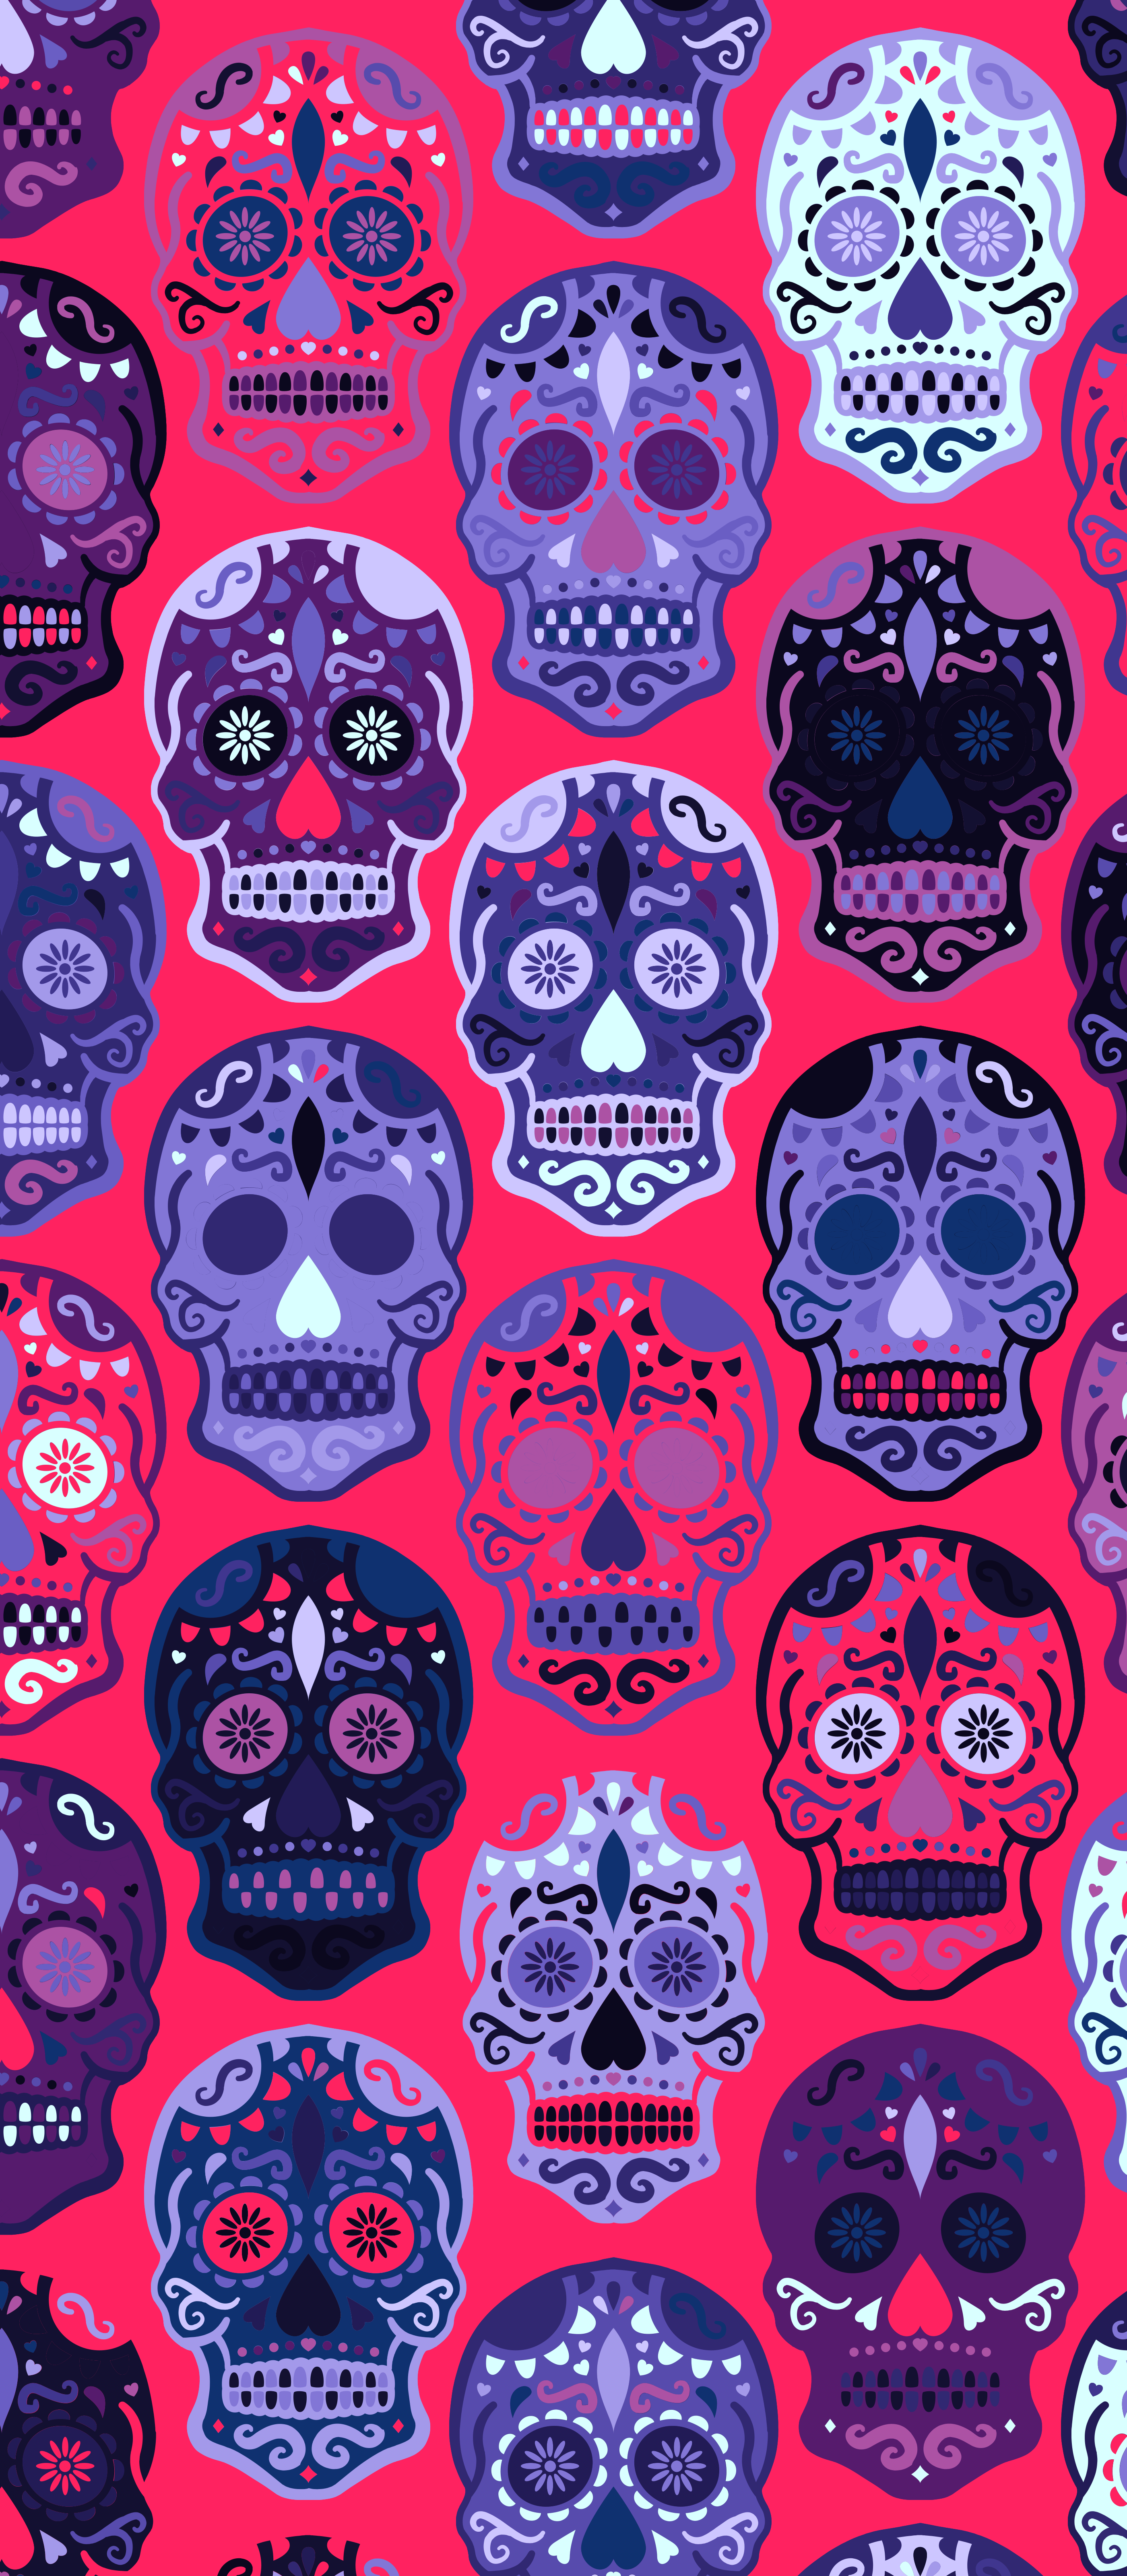 Russfussuk 'Dead Sweet' Skull Pattern (Alt Colour) M2B #pattern #patterndesign #patternprint #sugar #skull. Skull wallpaper, Simple wallpaper, iPhone wallpaper